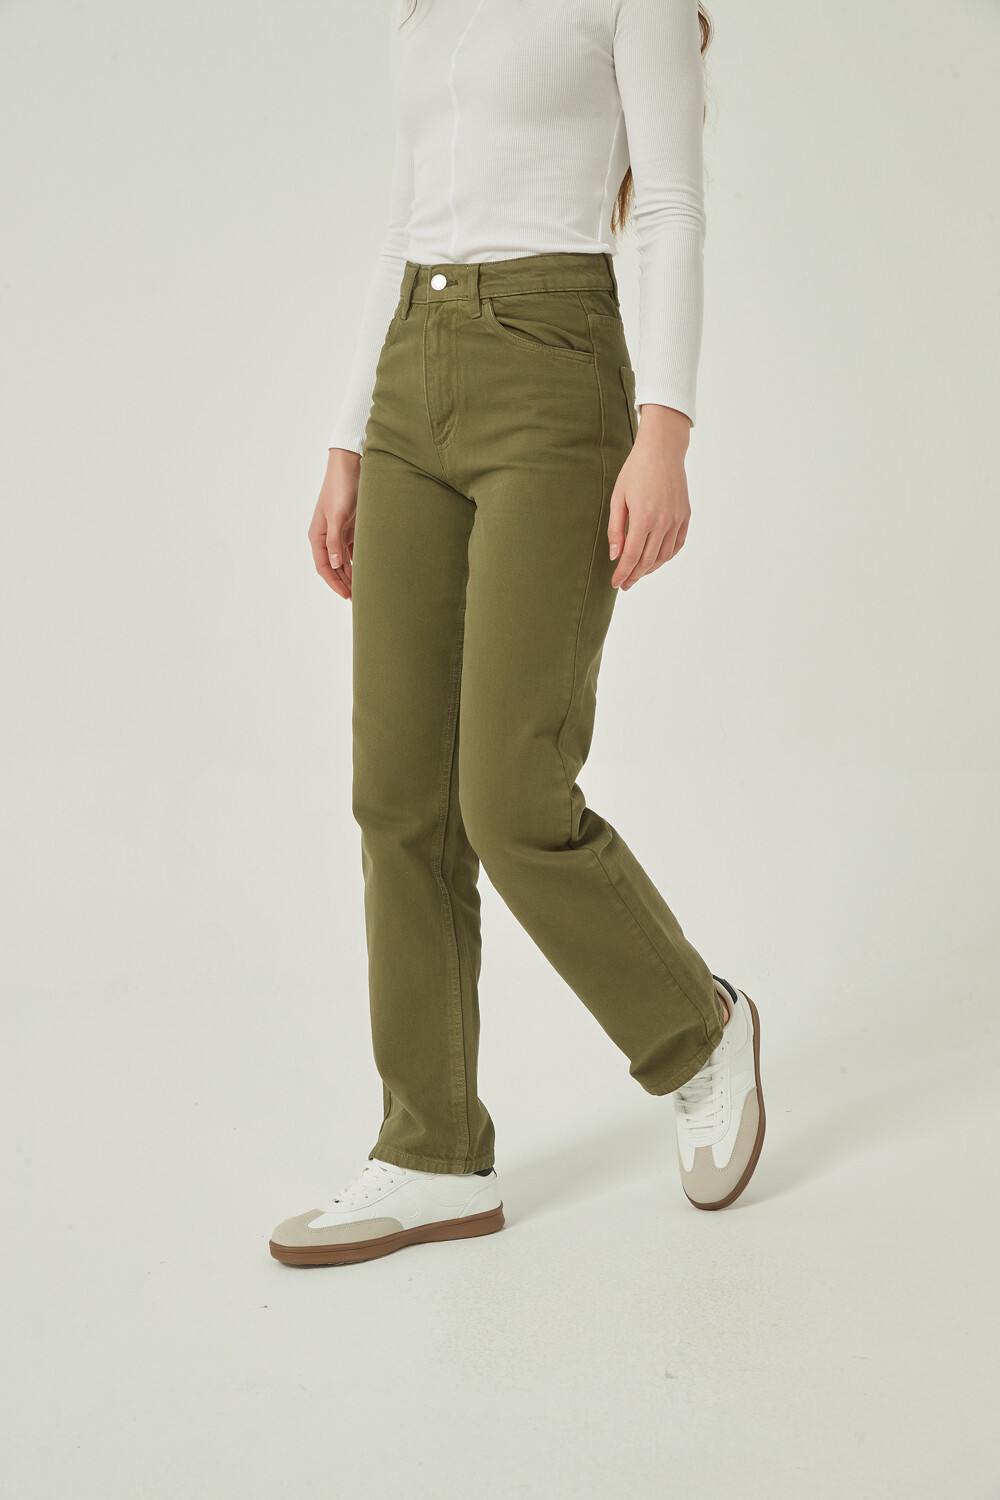 Pantalon Count Verde Oliva Oscuro